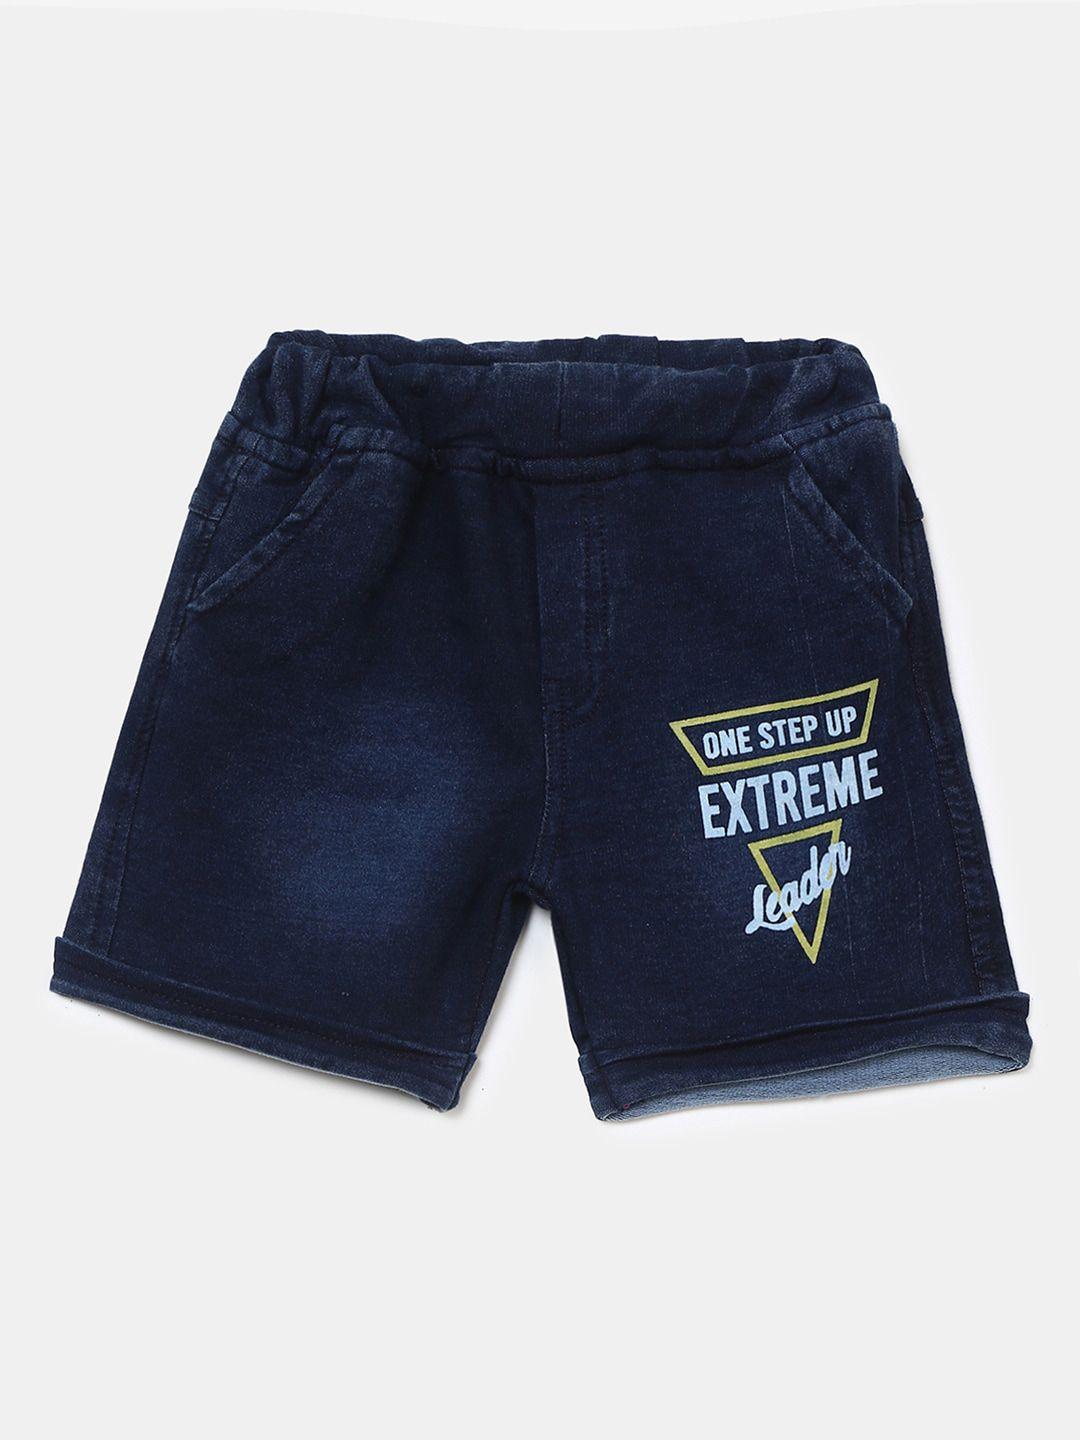 v-mart unisex kids outdoor denim shorts